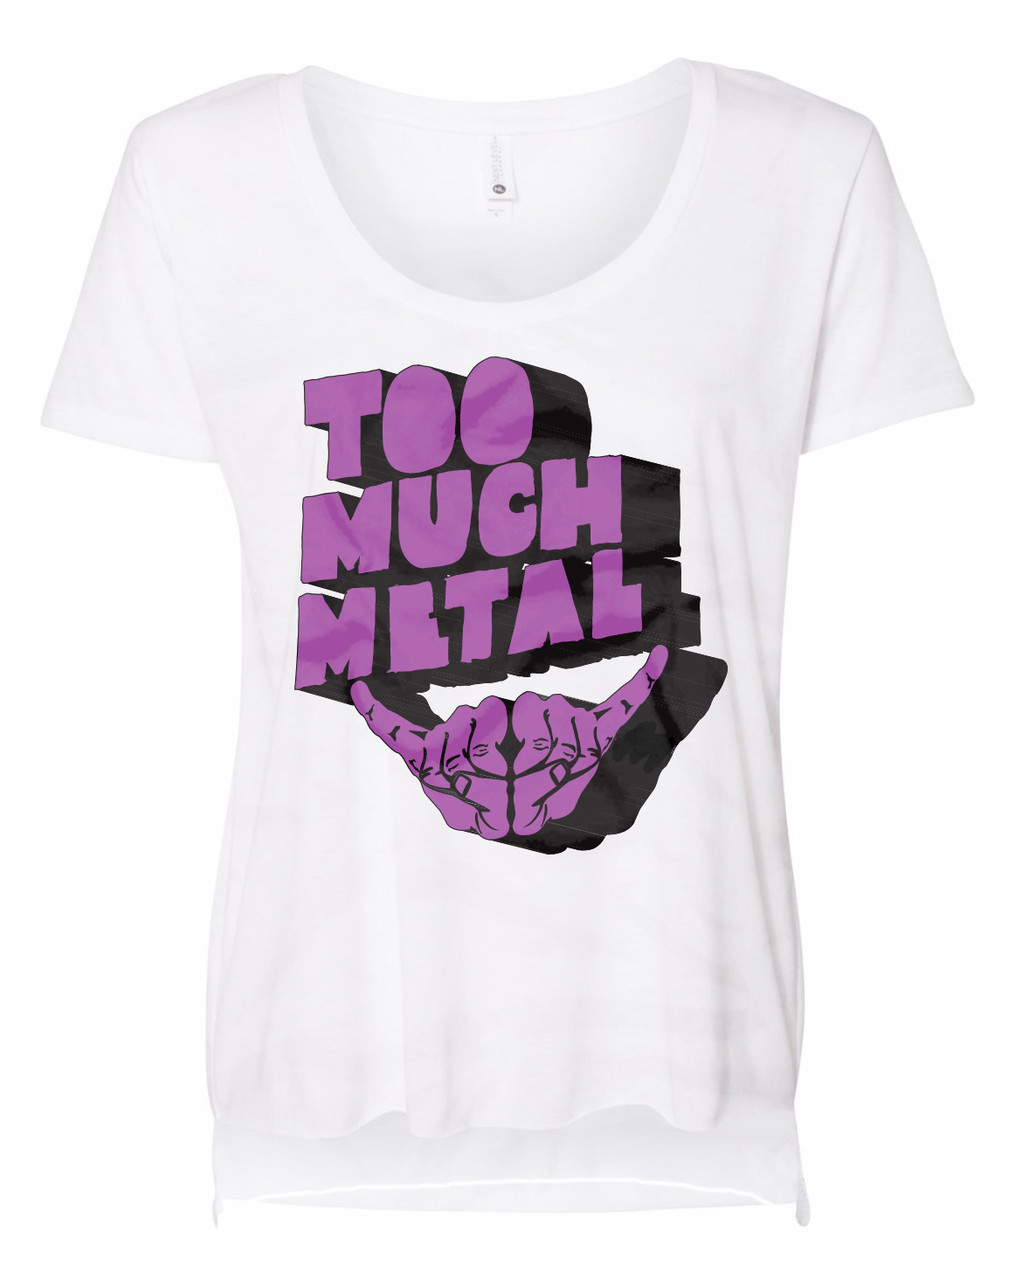 theorie Streven Veronderstellen Too Much Metal Deep Purple Shirt